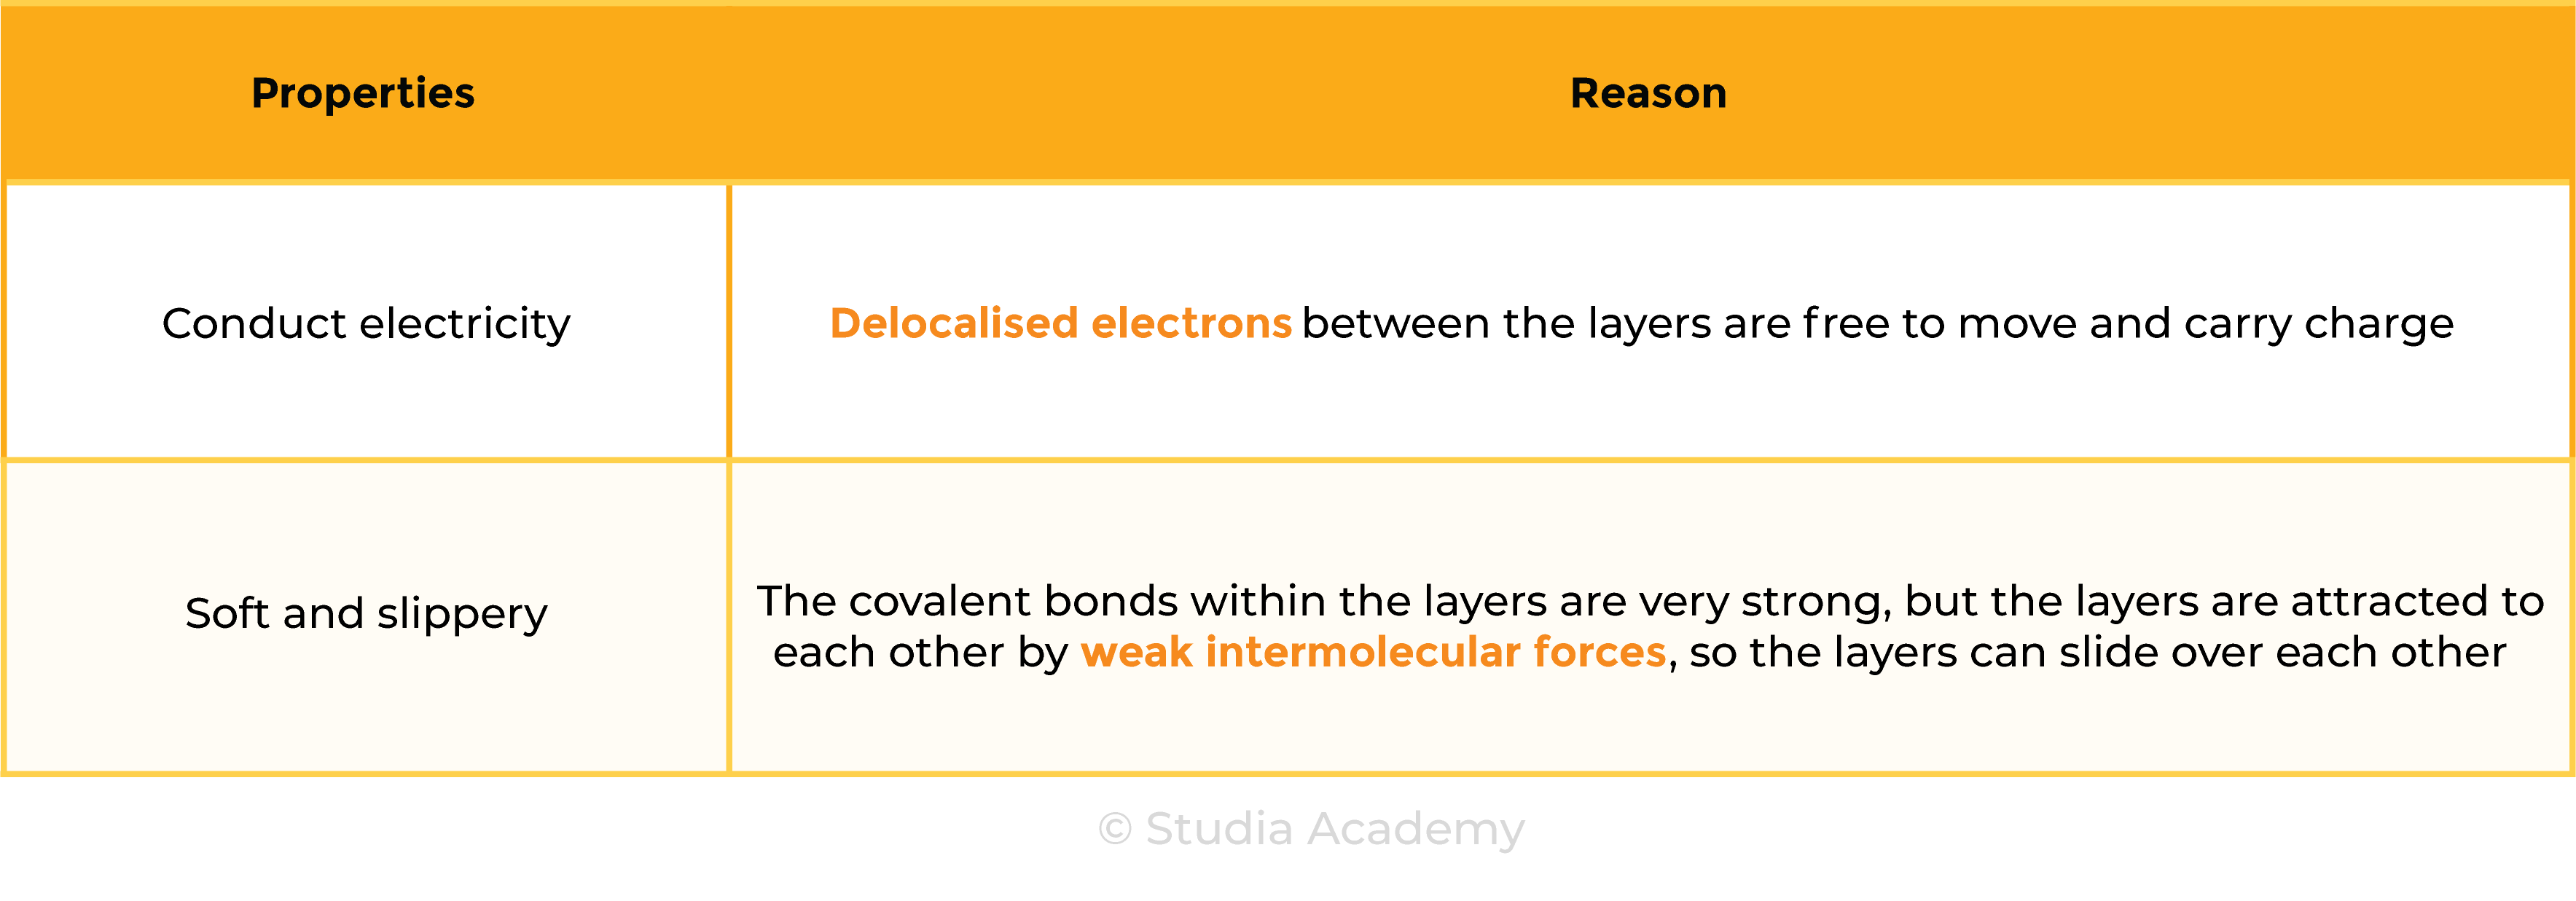 edexcel_igcse_chemistry_topic 08 tables_metallic bonding_001_physical properties of metals explanation